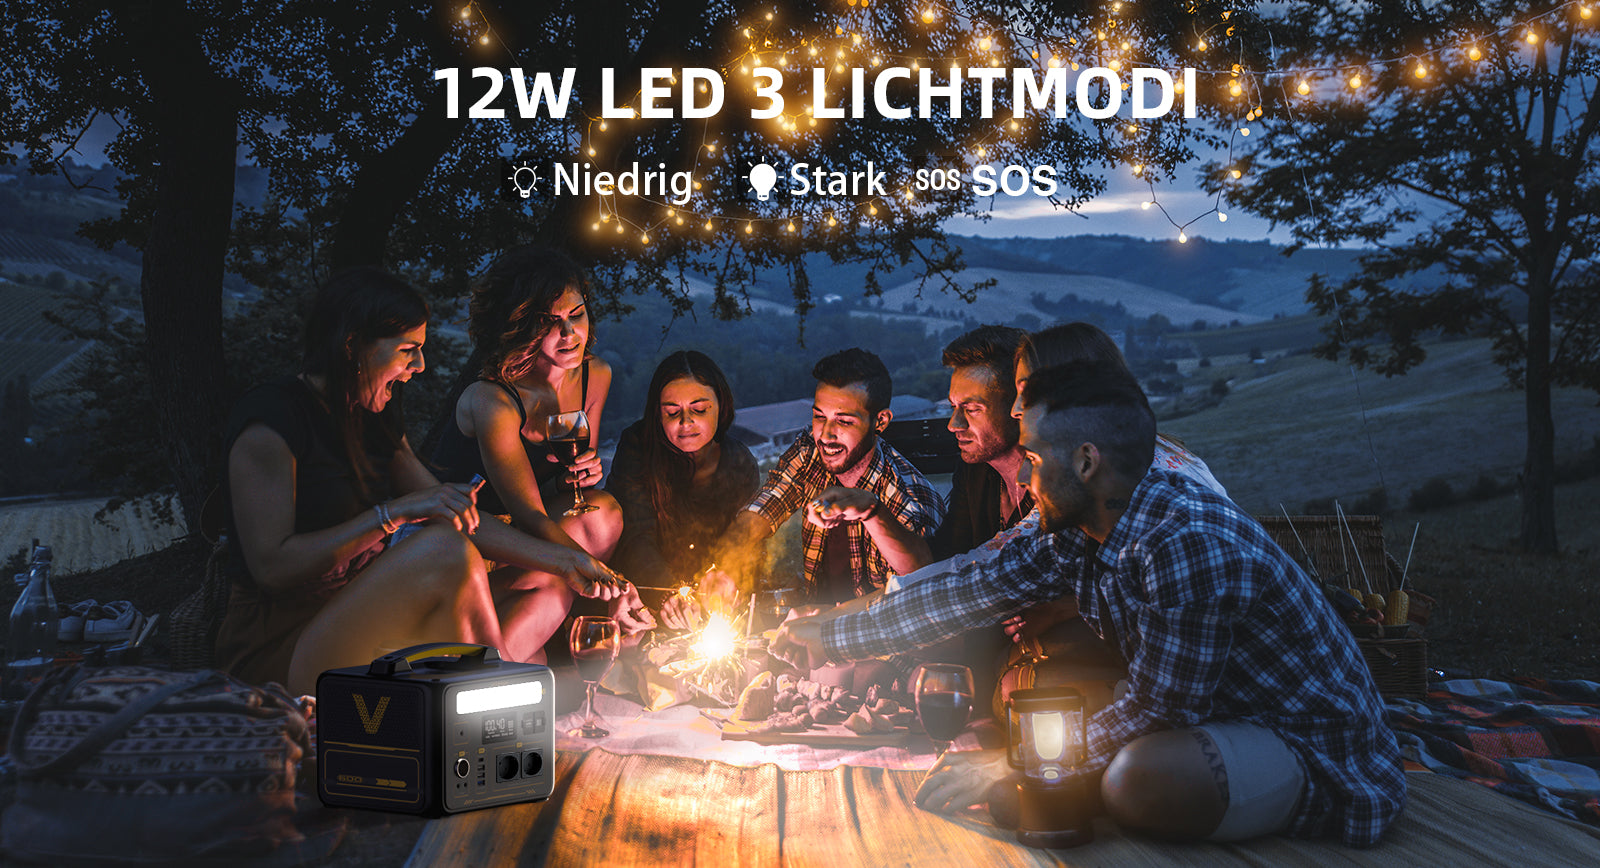 Built-in 12W LED flashlight with 5 modes(Weak/Medium/Strong/Strobe/SOS)